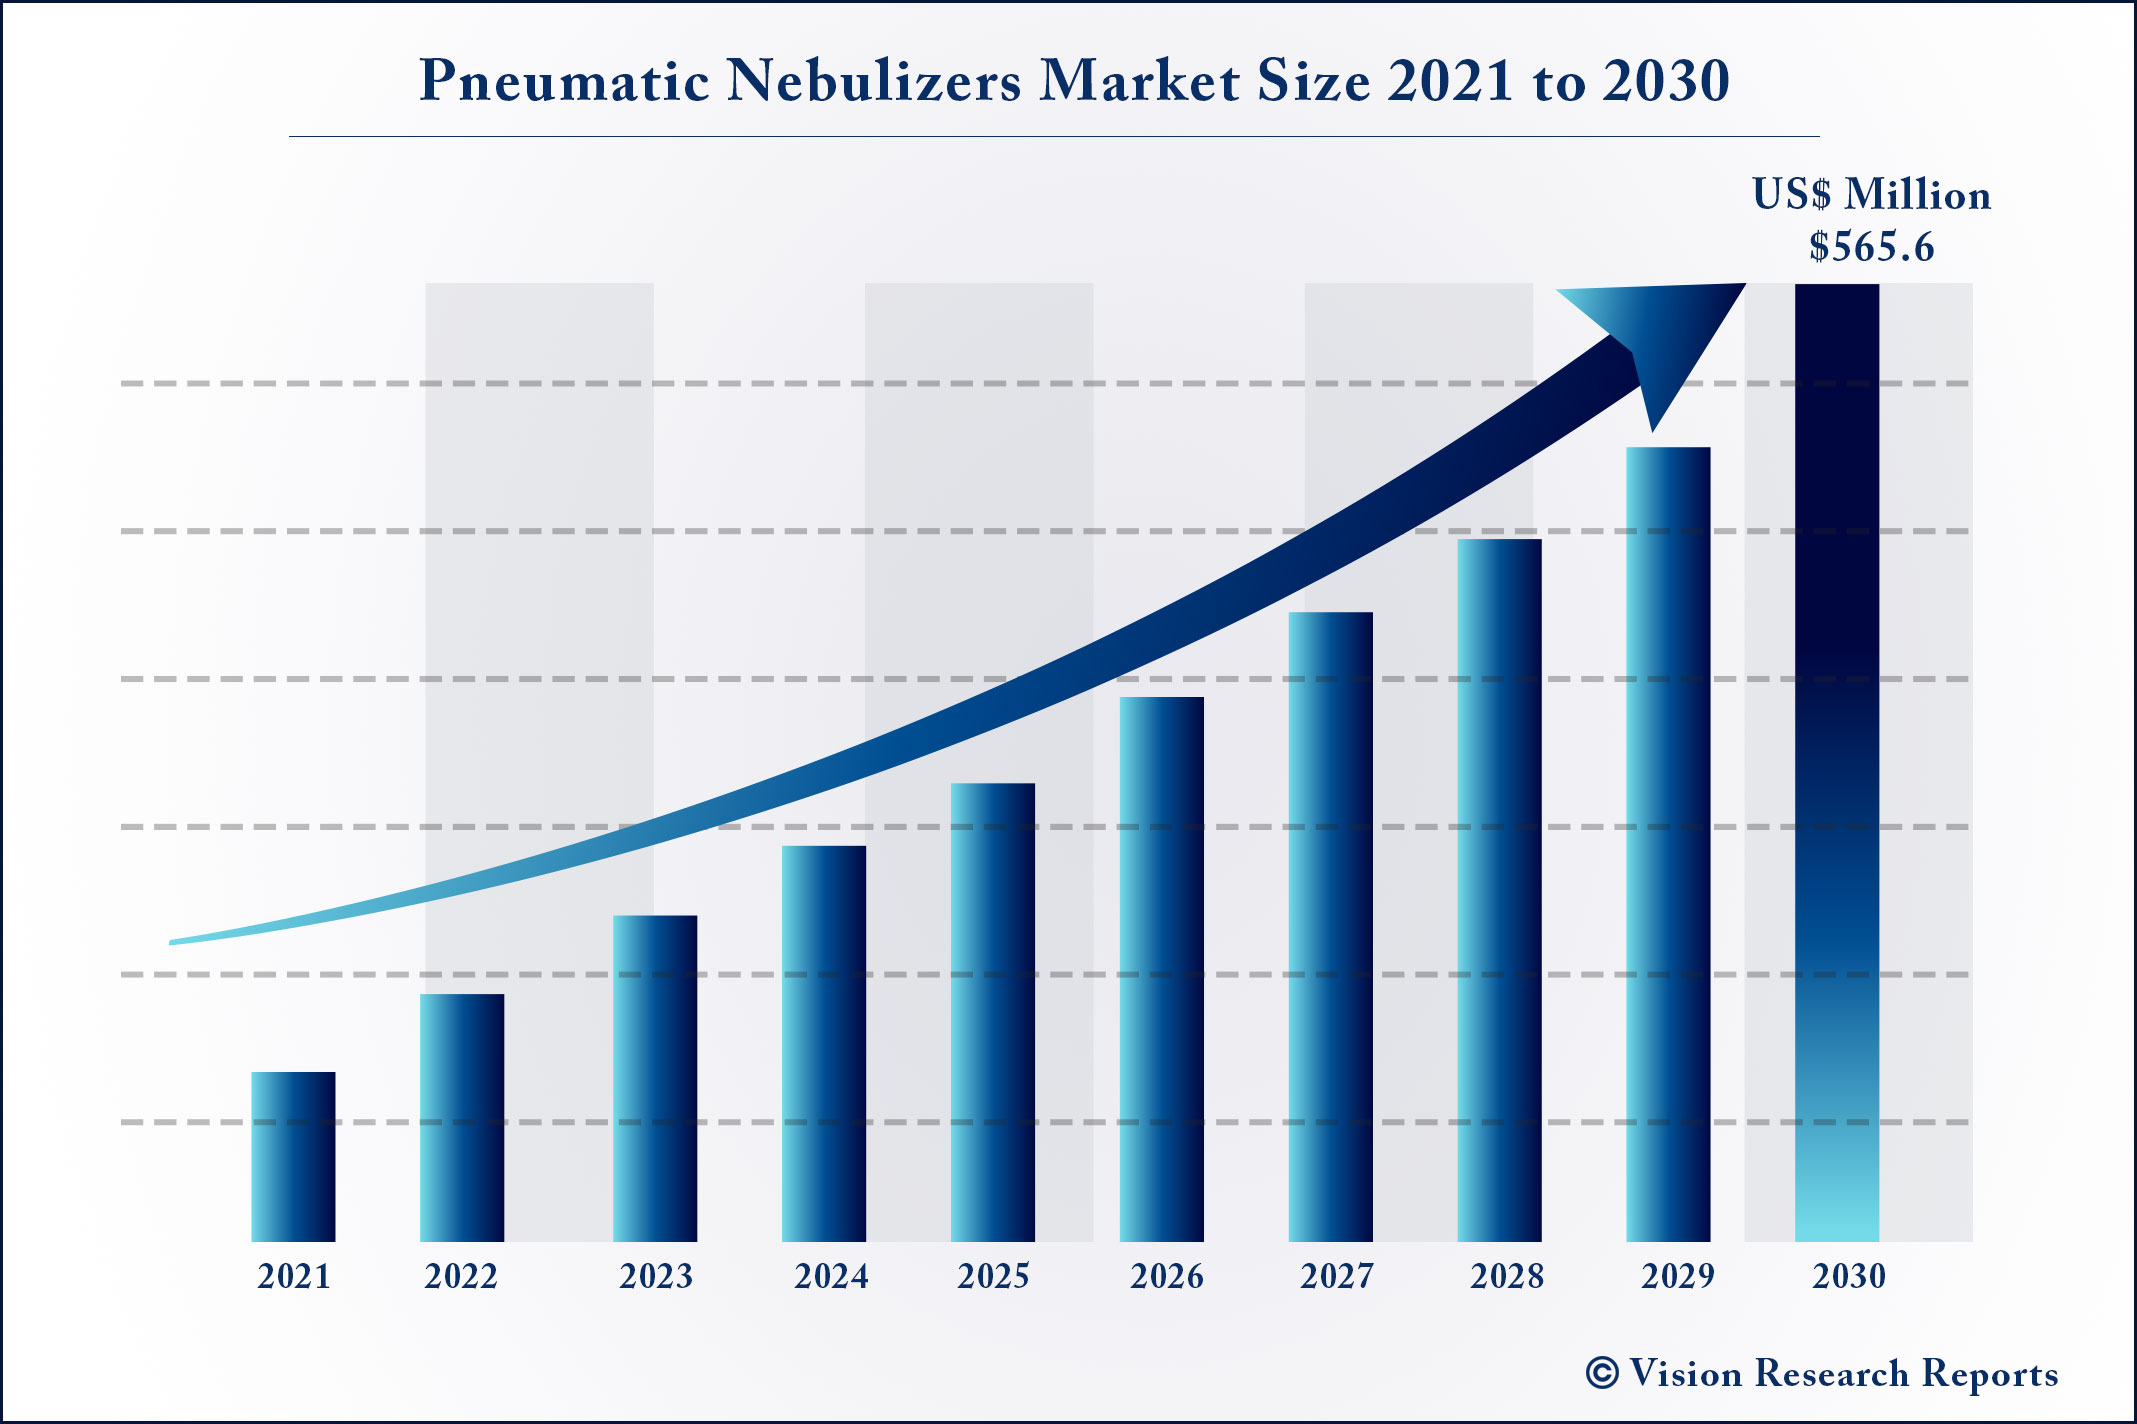 Pneumatic Nebulizers Market Size 2021 to 2030